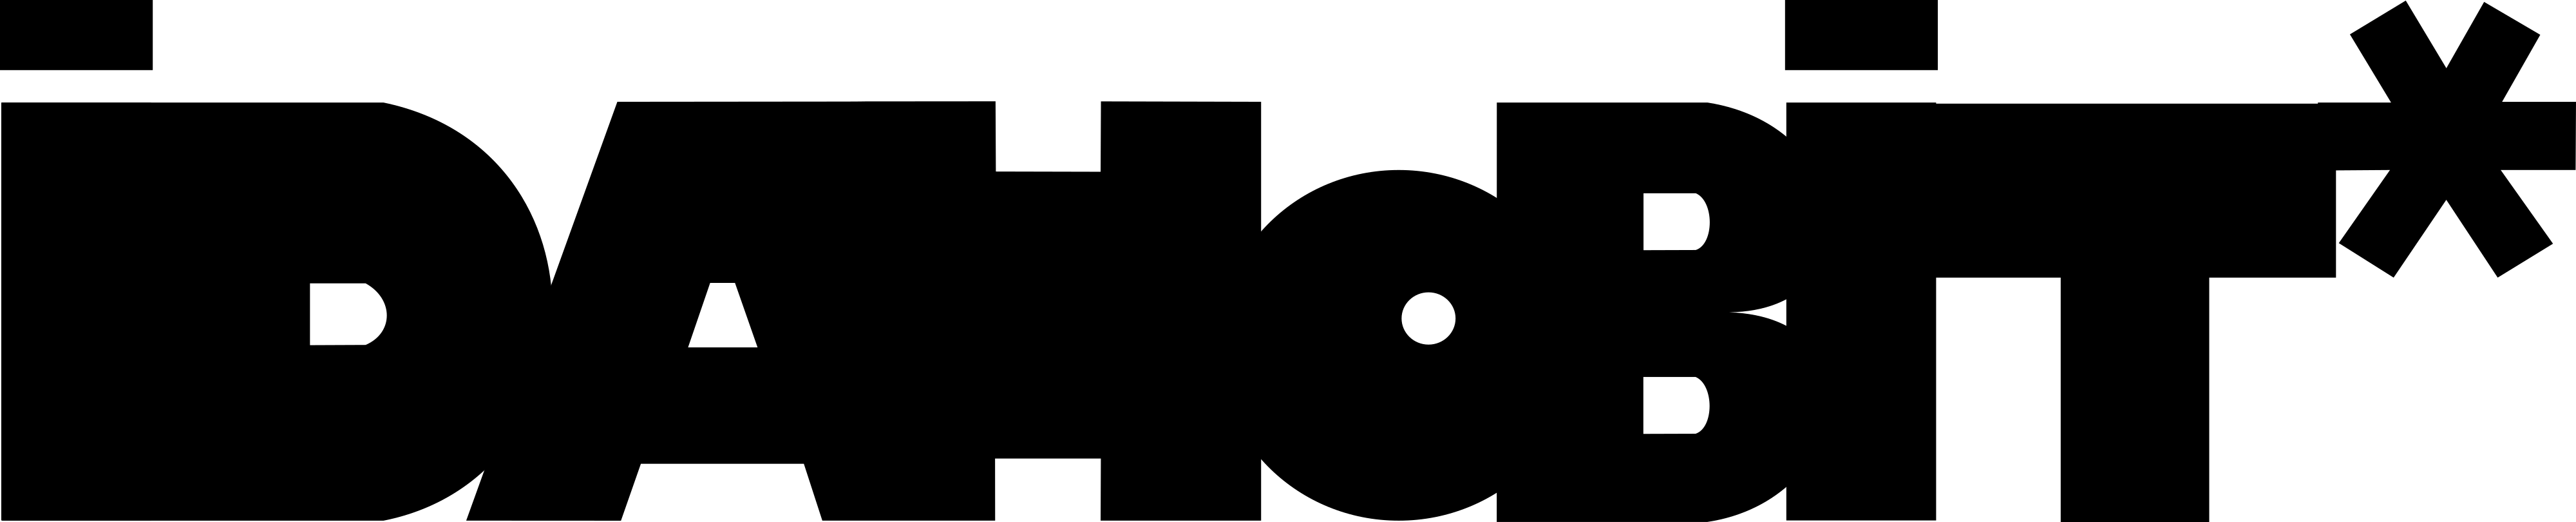 IDAHoBIT Logo 2017 04 25